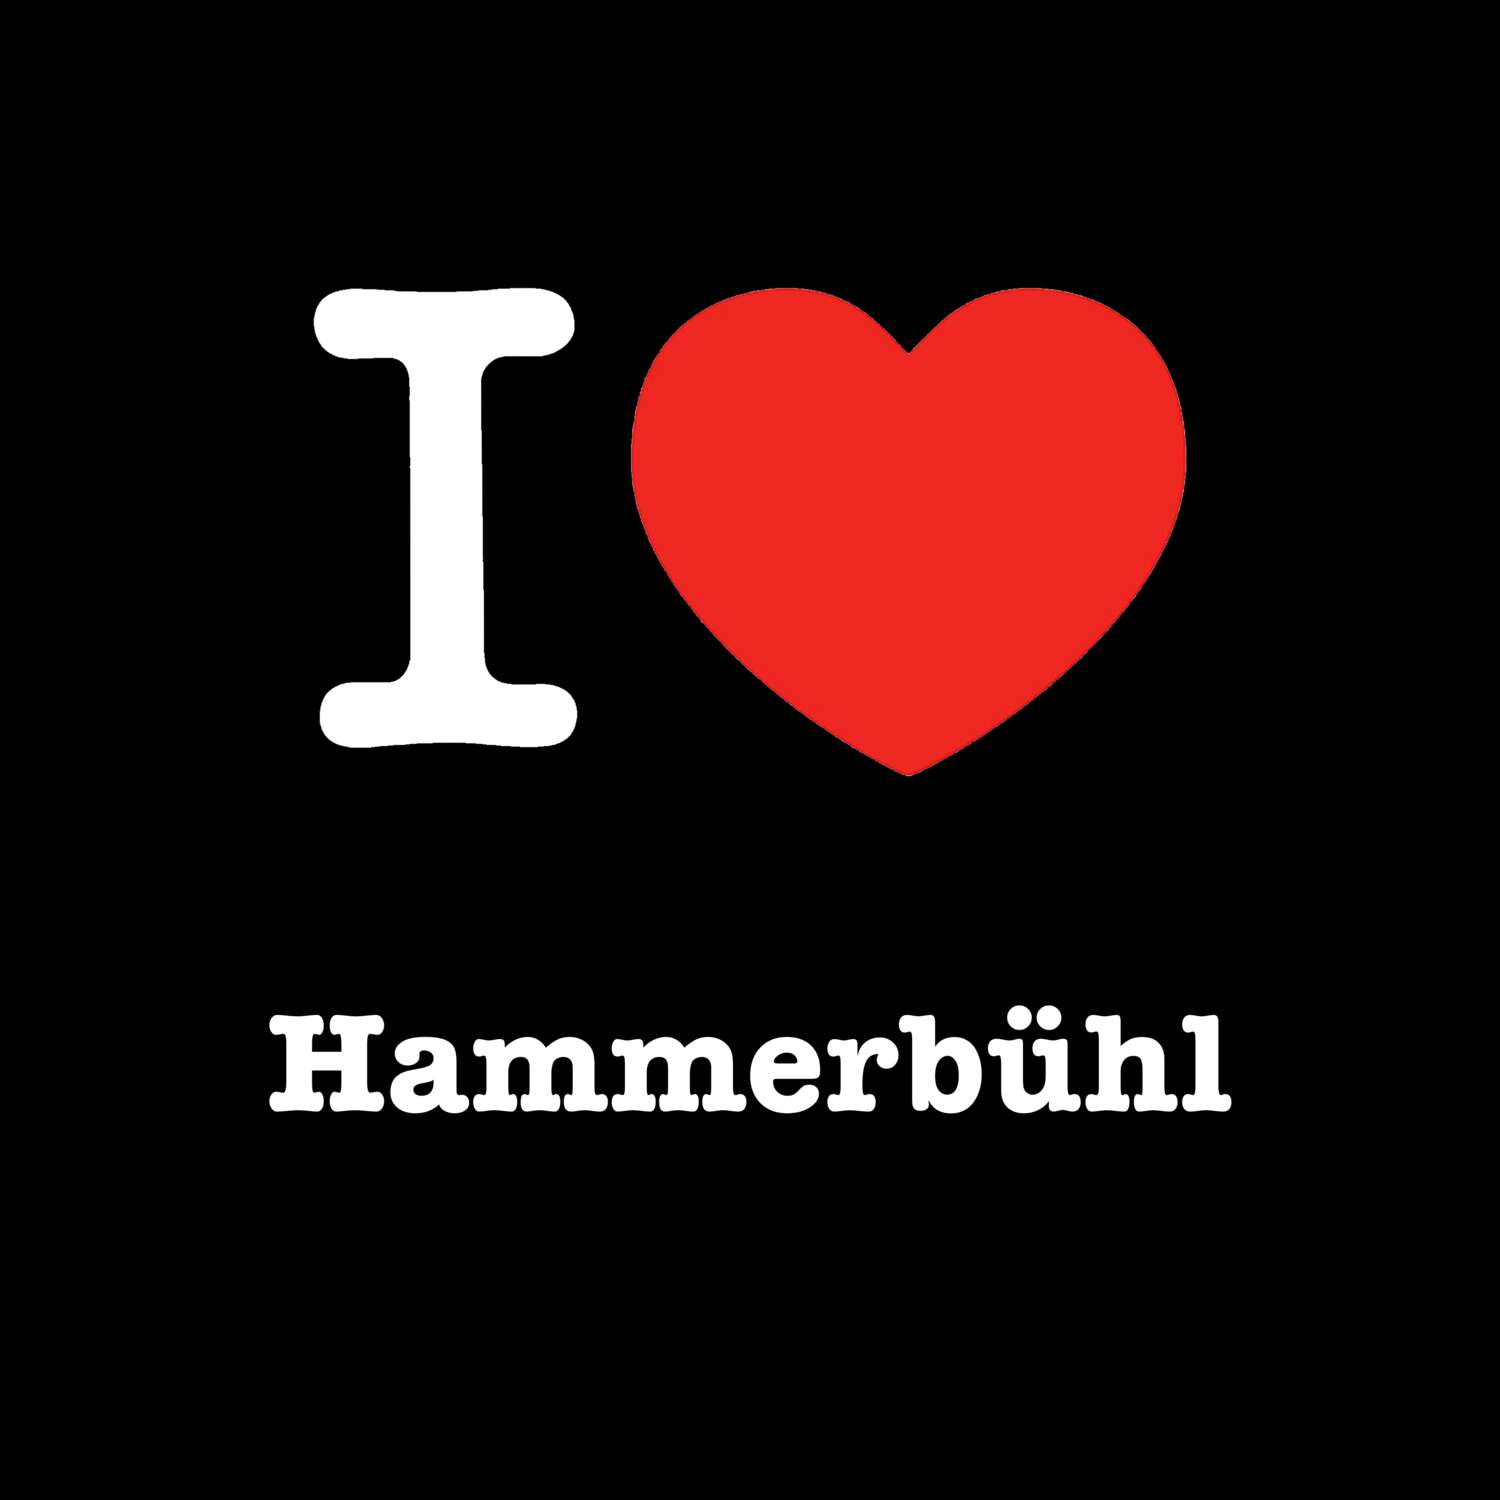 Hammerbühl T-Shirt »I love«